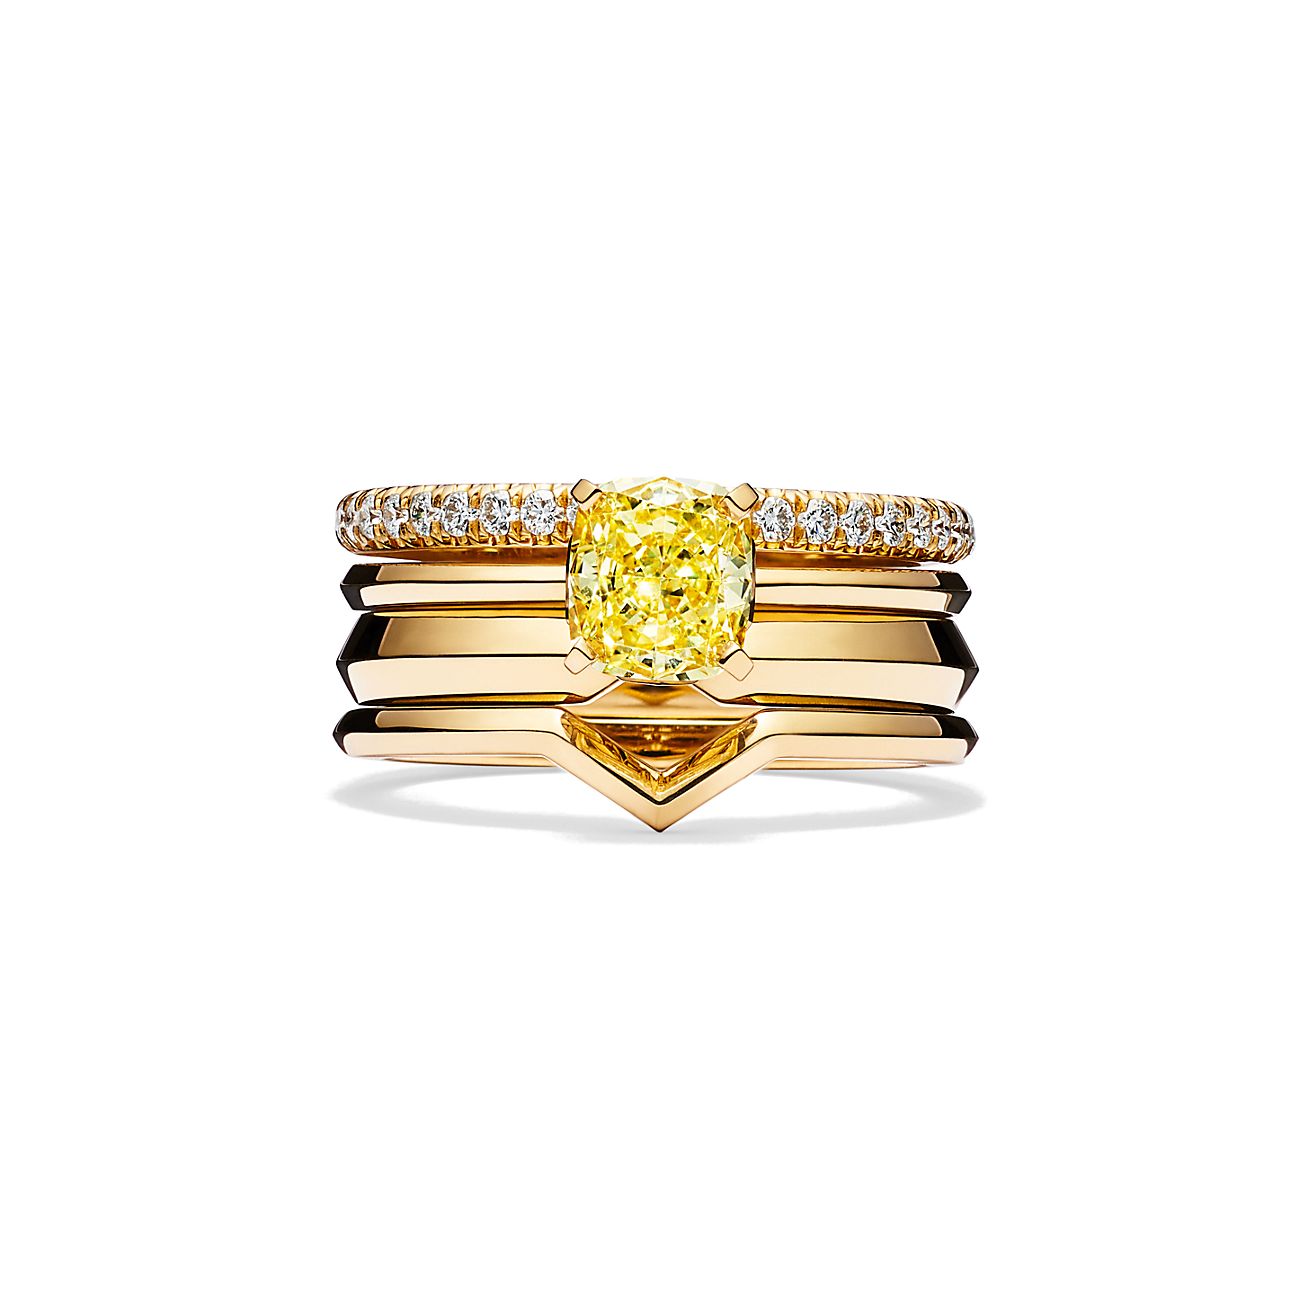 tiffany true engagement ring with a cushion cut yellow diamond in 18k yellow gold 63514136 996217 AV 3 M.jpg?\u0026op usm\u003d1.75,1.0,6